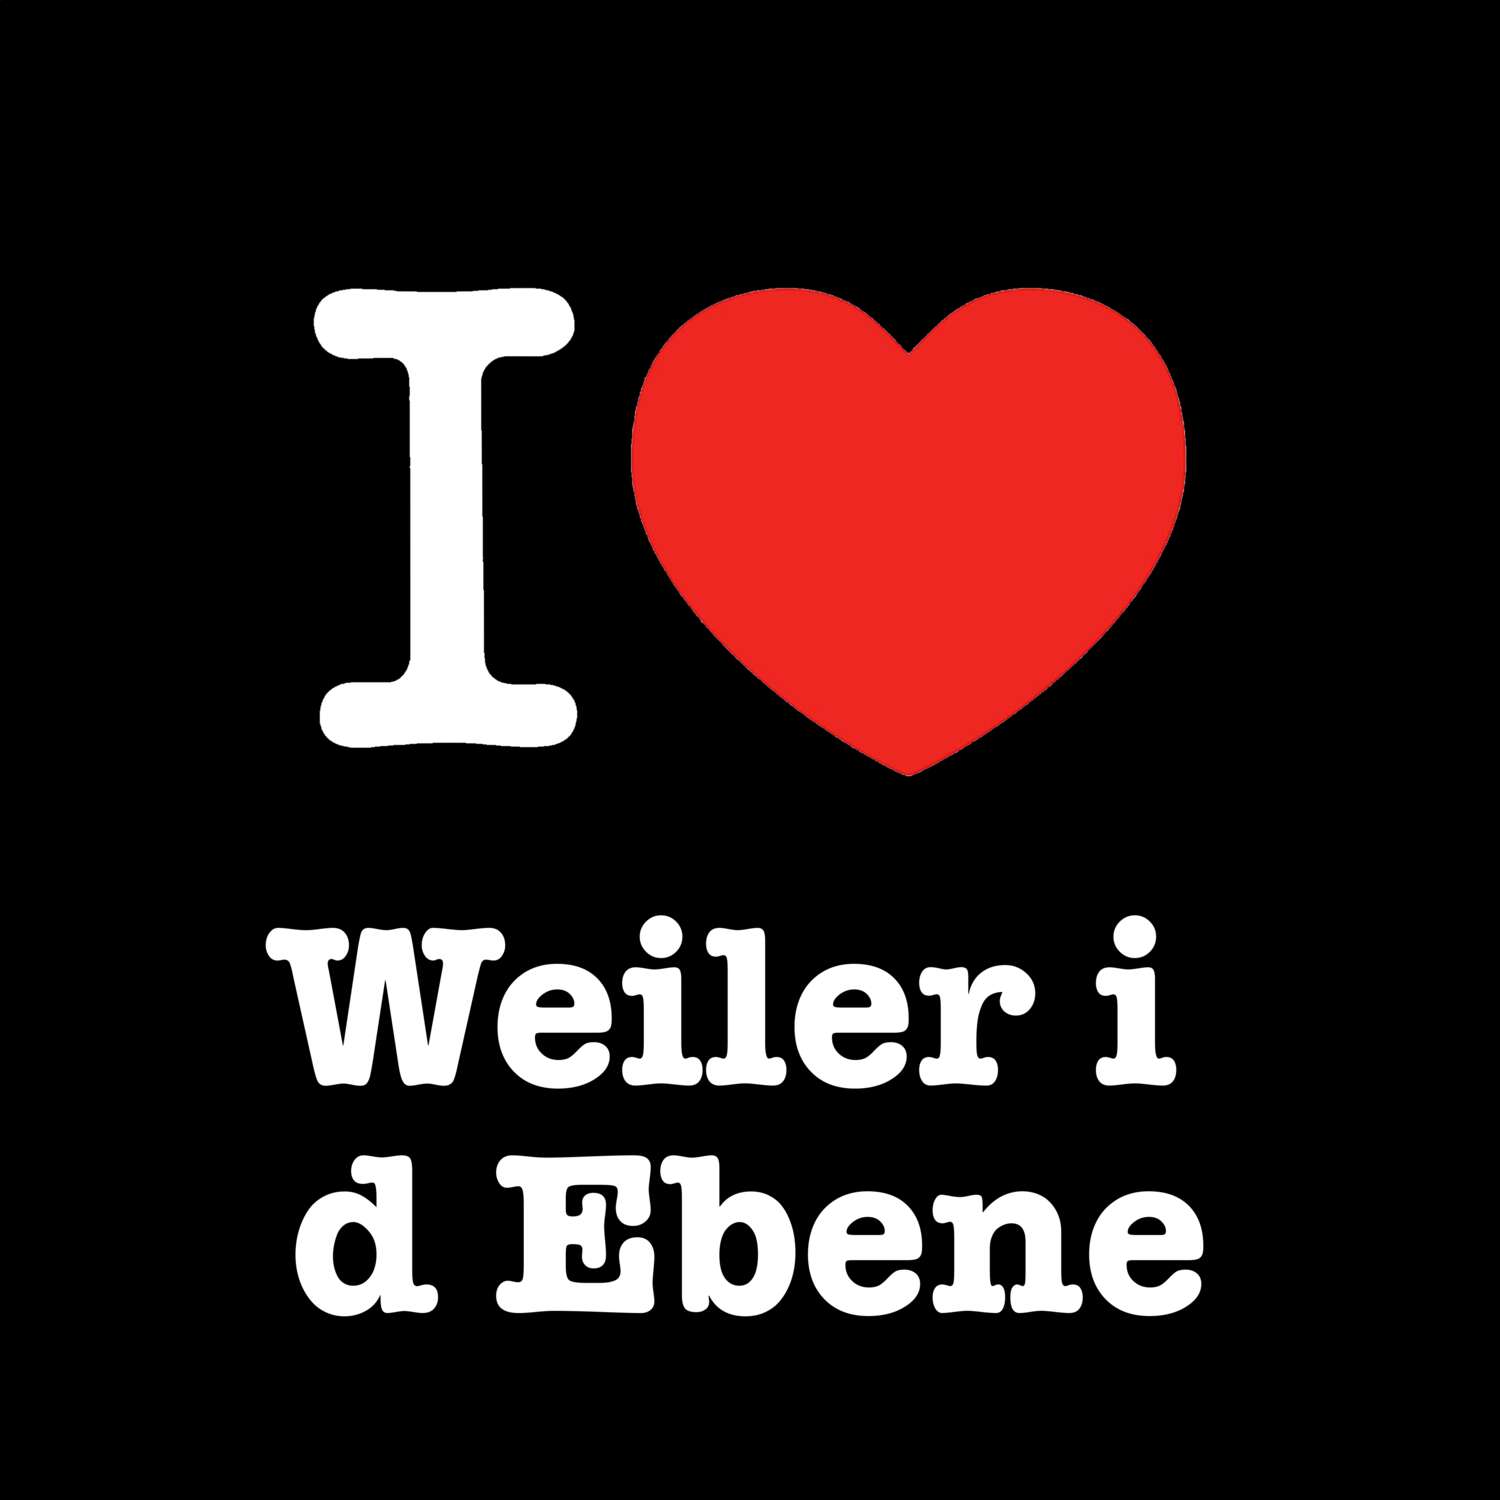 Weiler i d Ebene T-Shirt »I love«